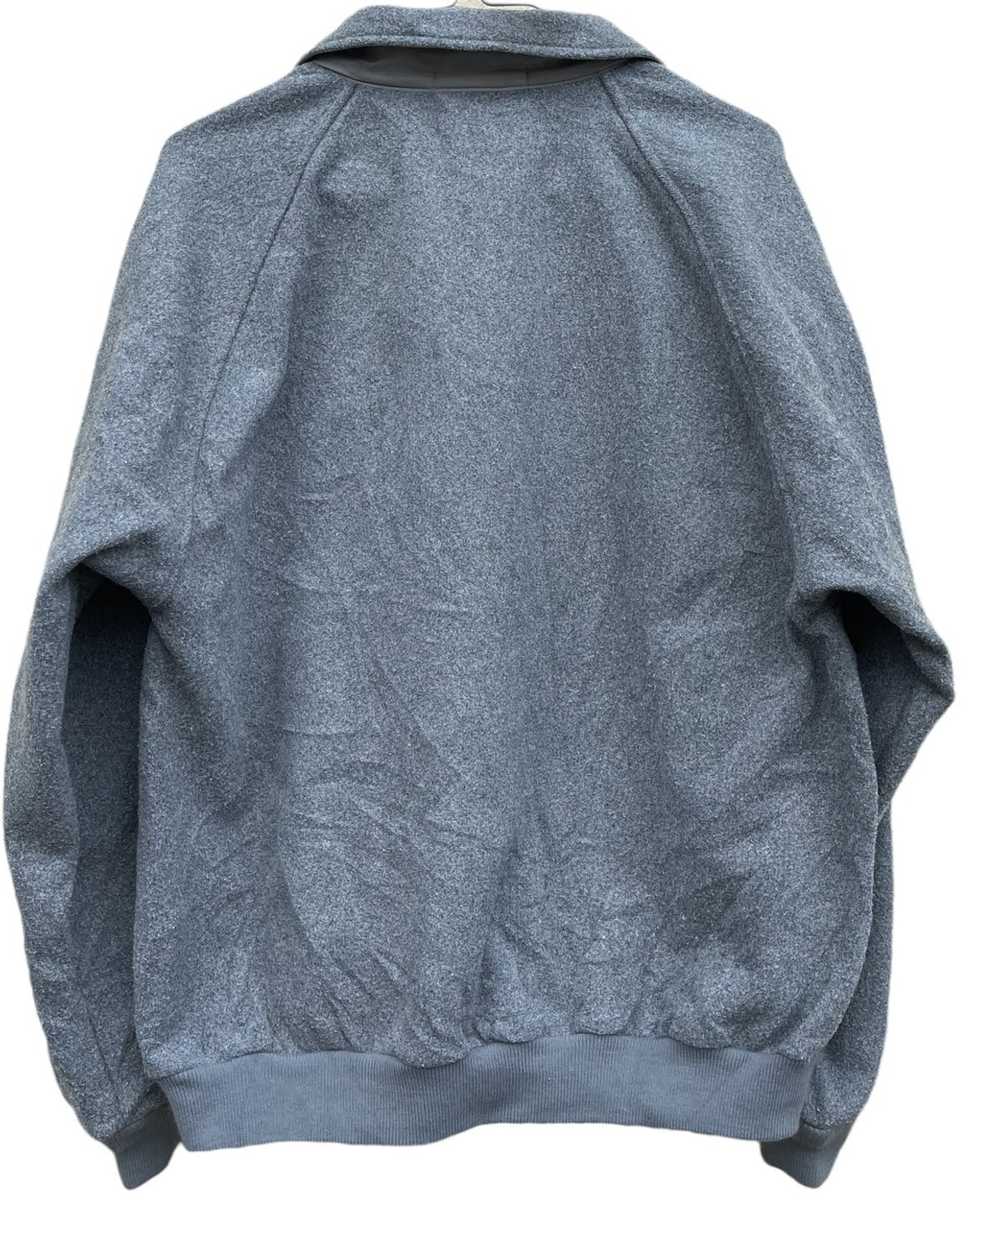 Japanese Brand × Other Unbranded sweatshirts - image 2